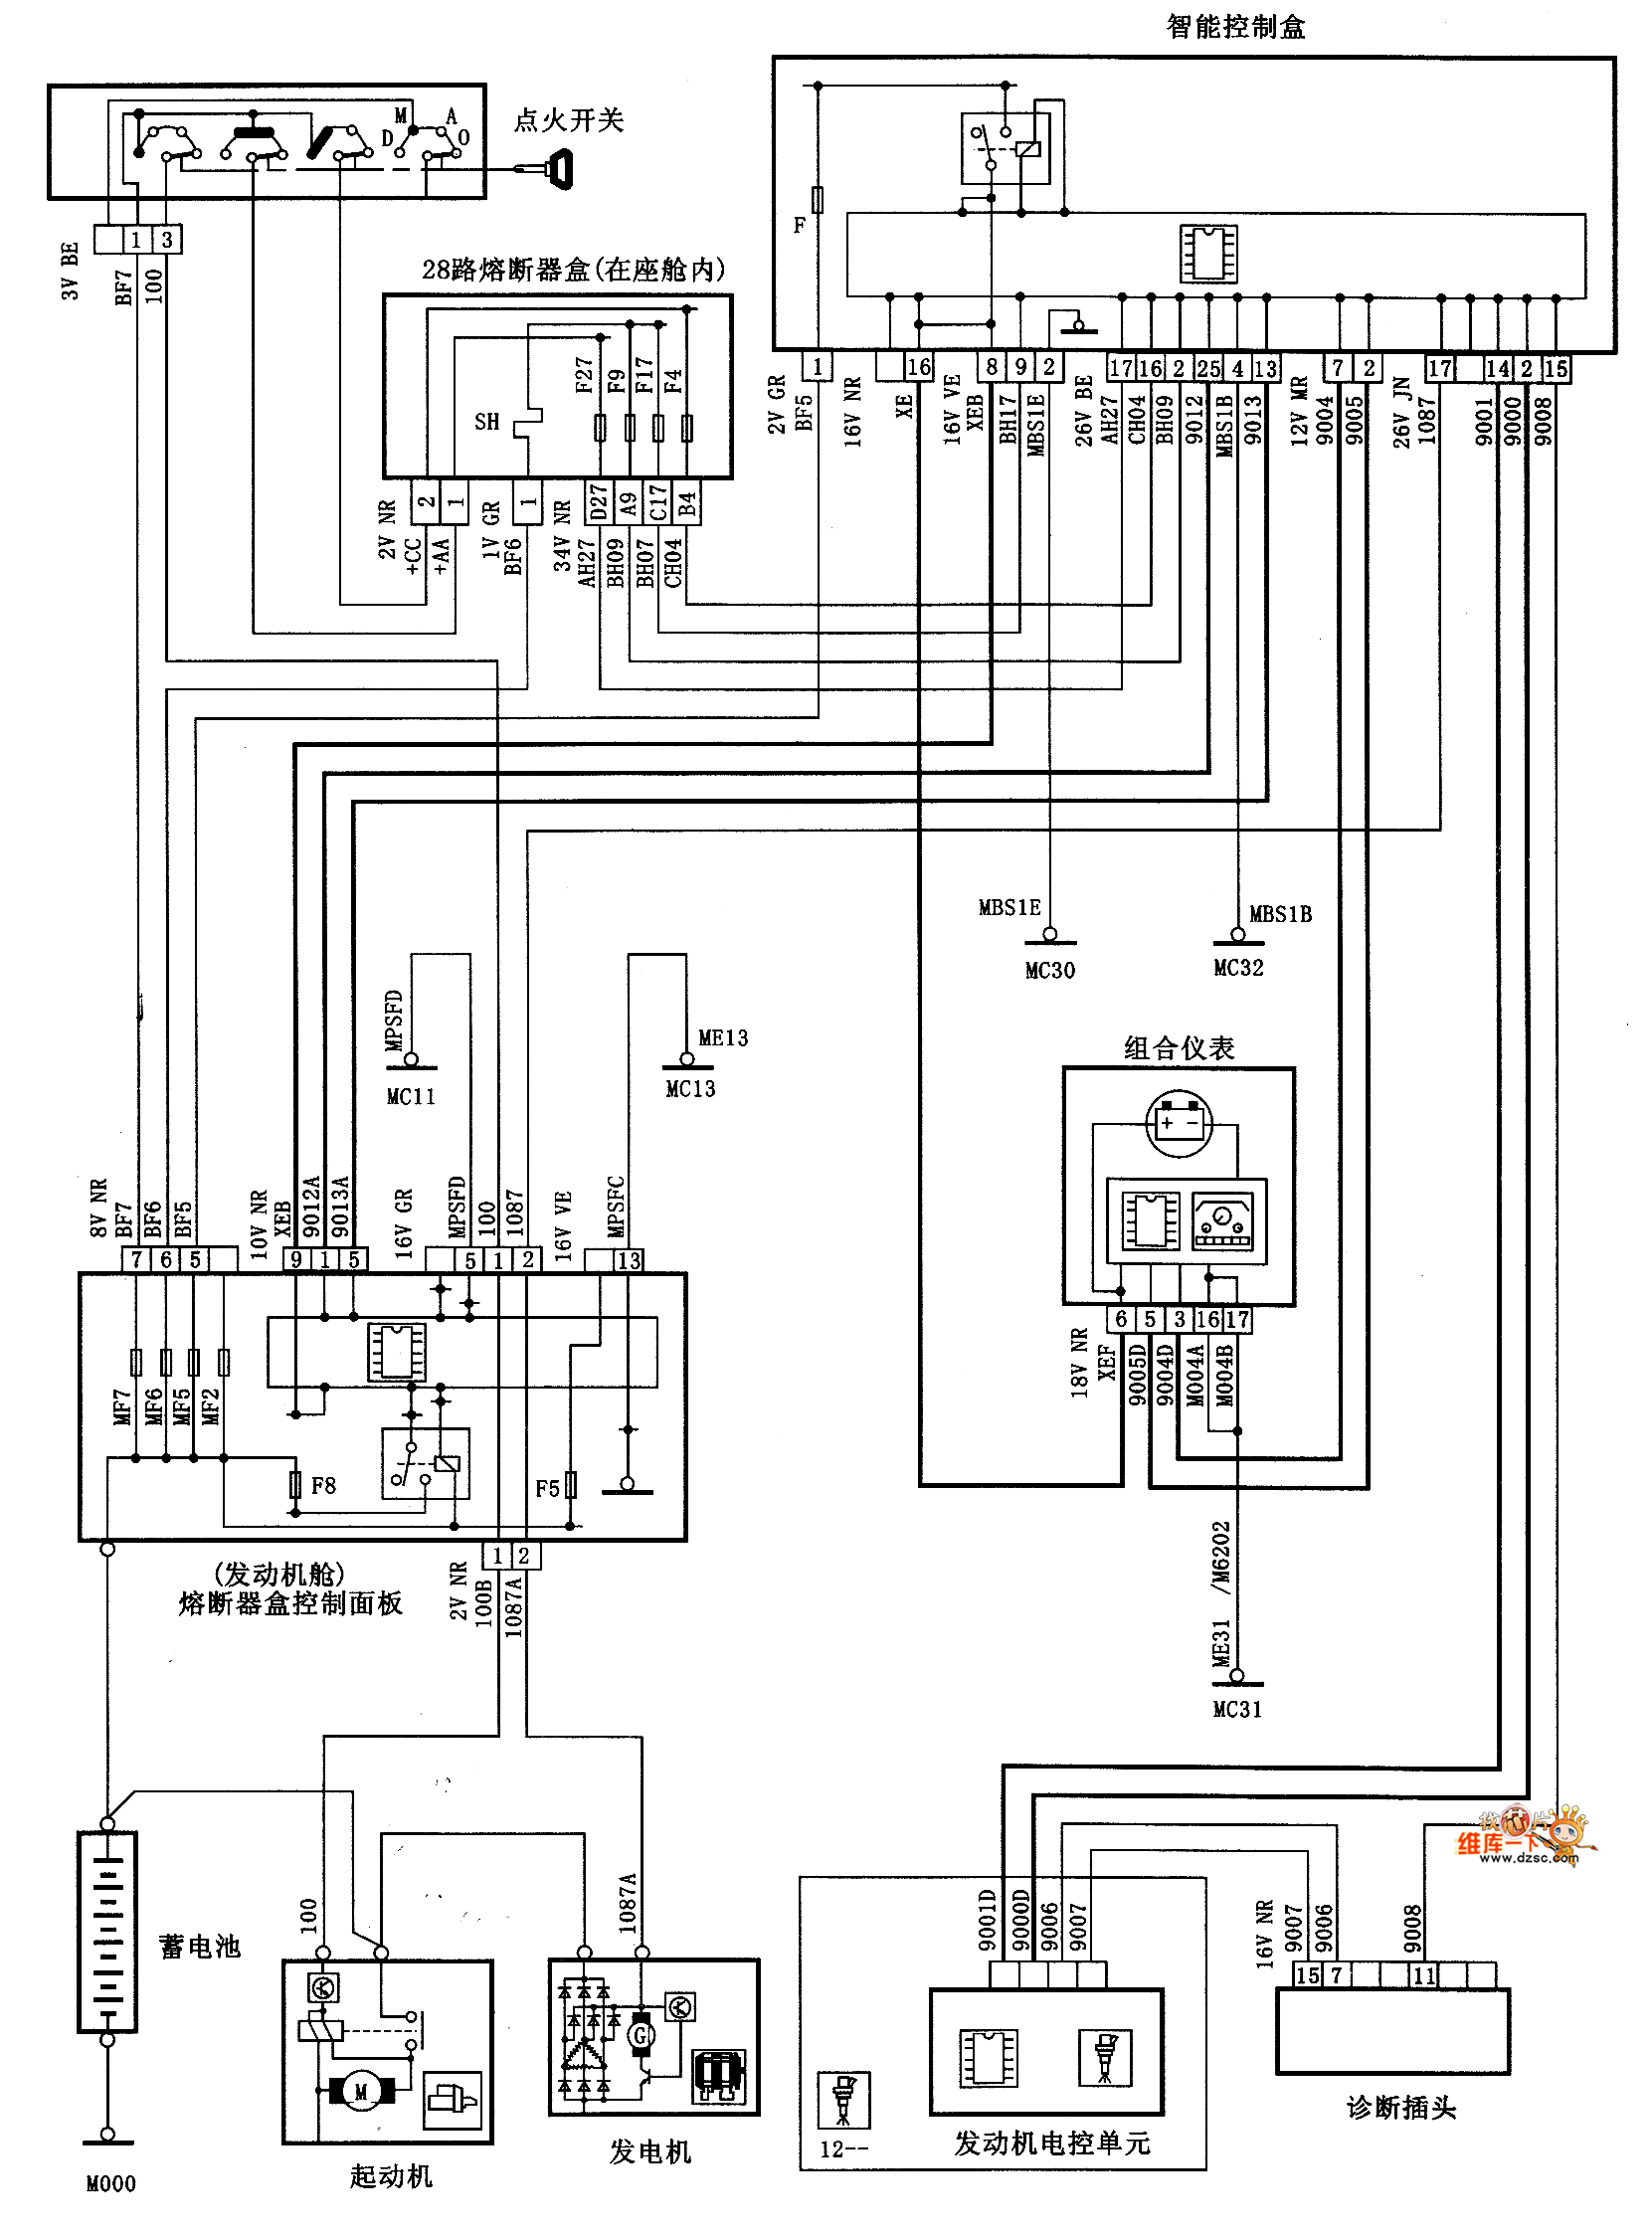 Electrical Wiring: Citroen Xsara Electrical Wiring Diagram